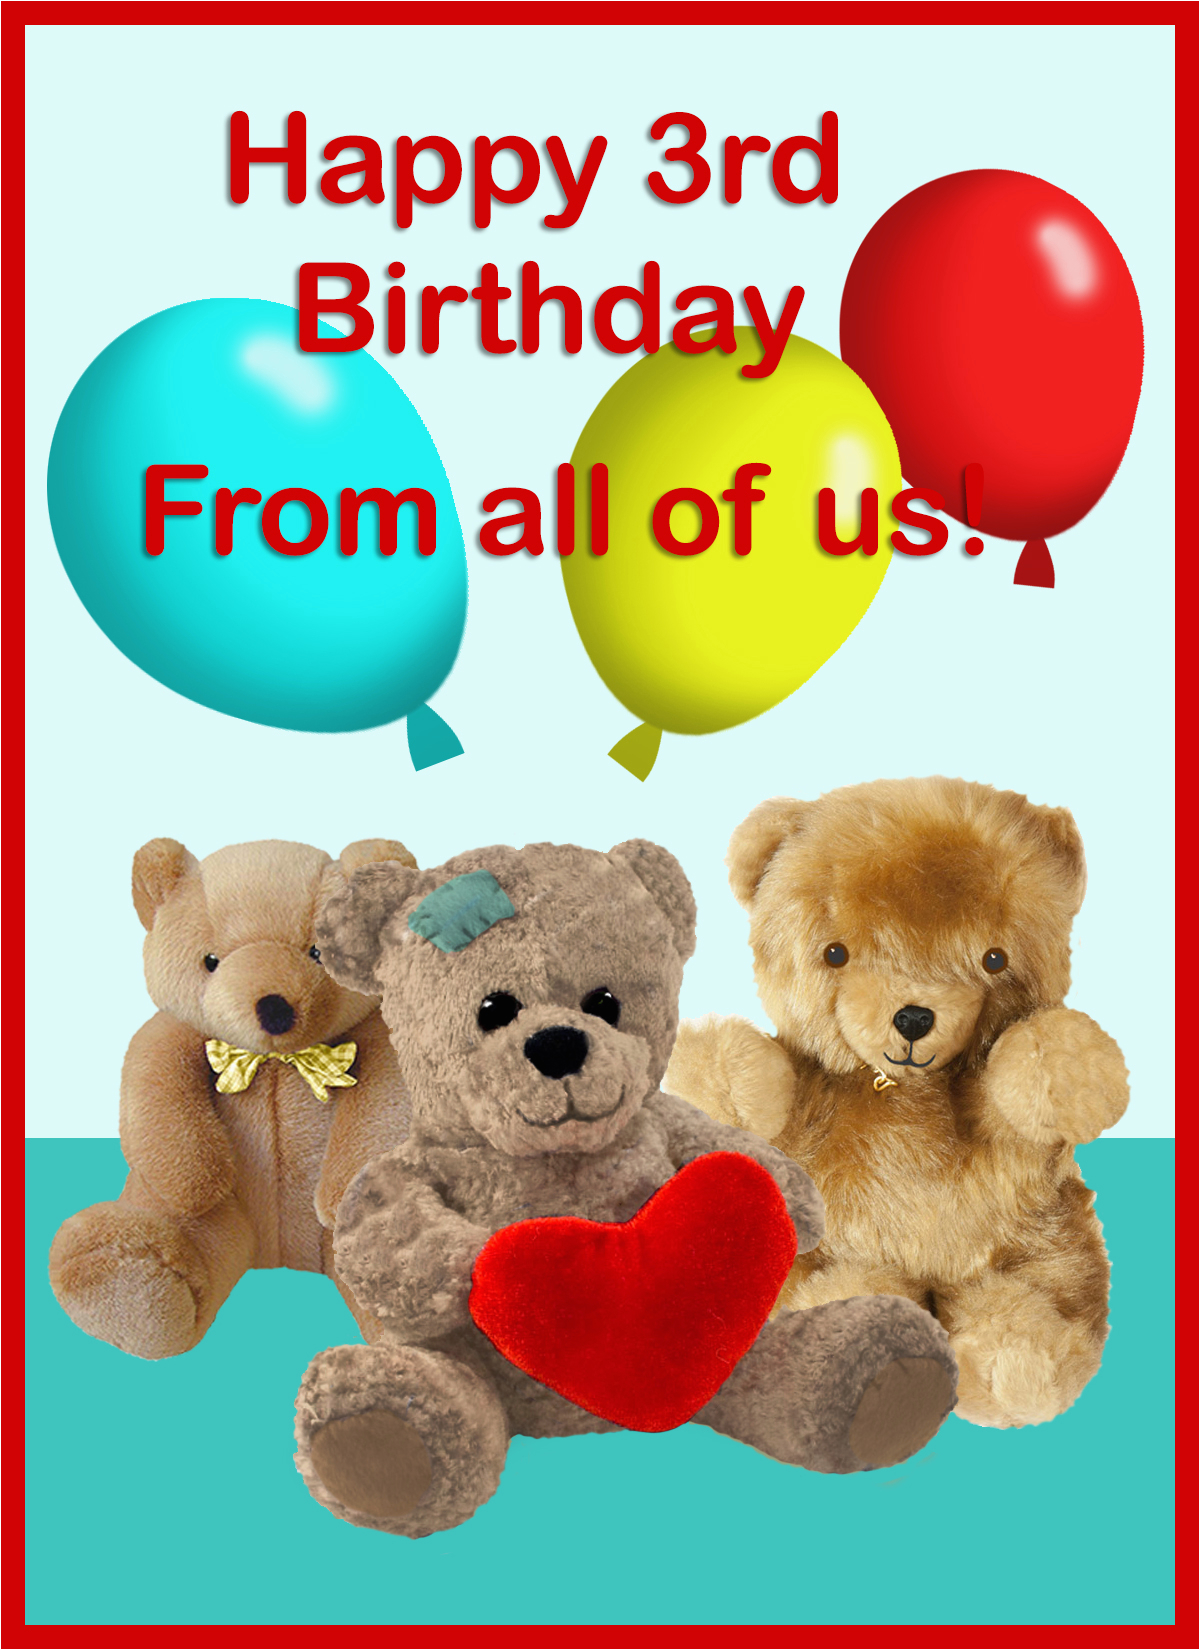 free birthday cards with teddy bears